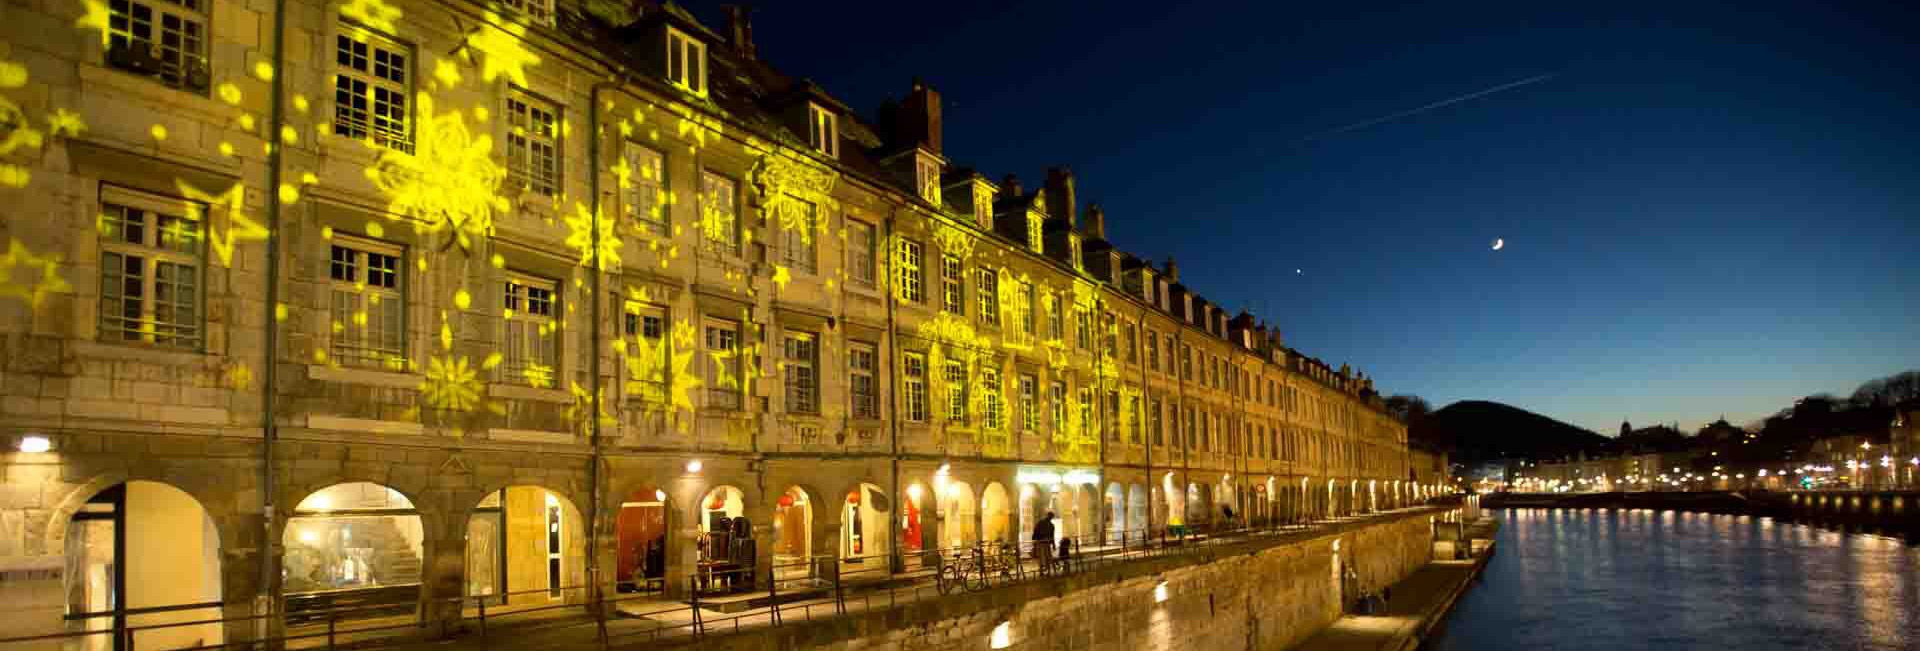 Besançon by night